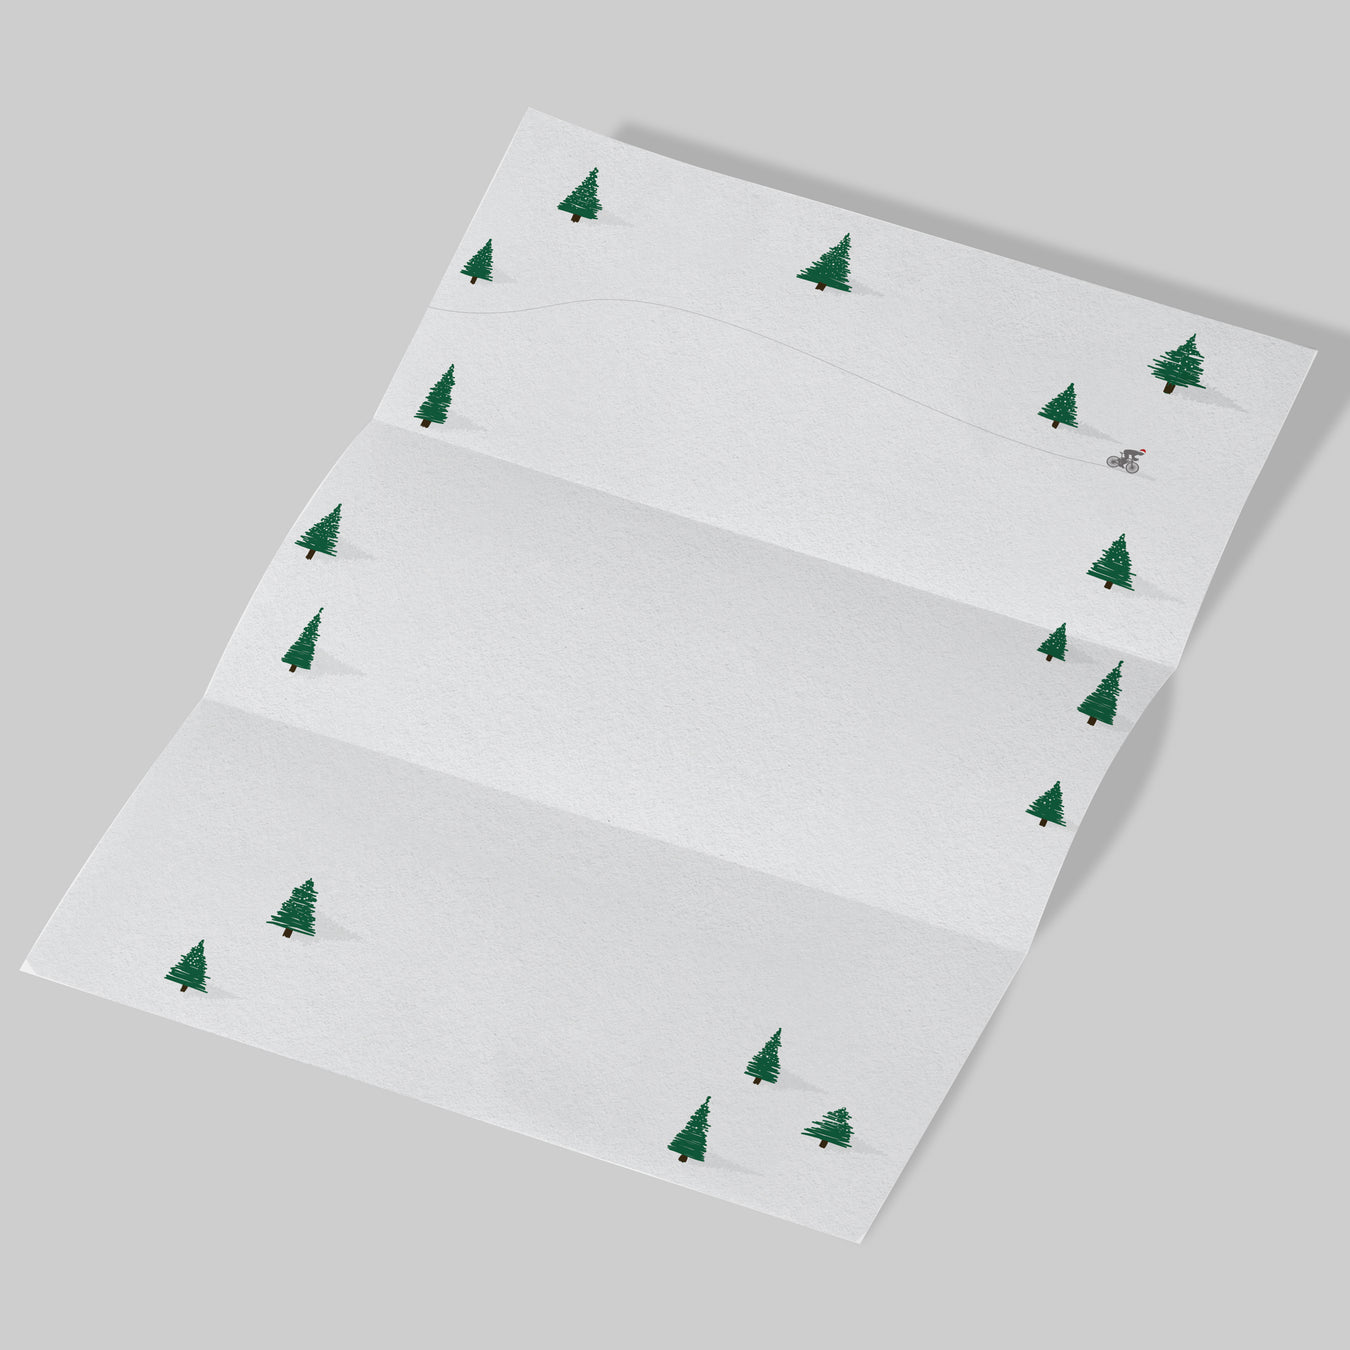 Printed Letterheads